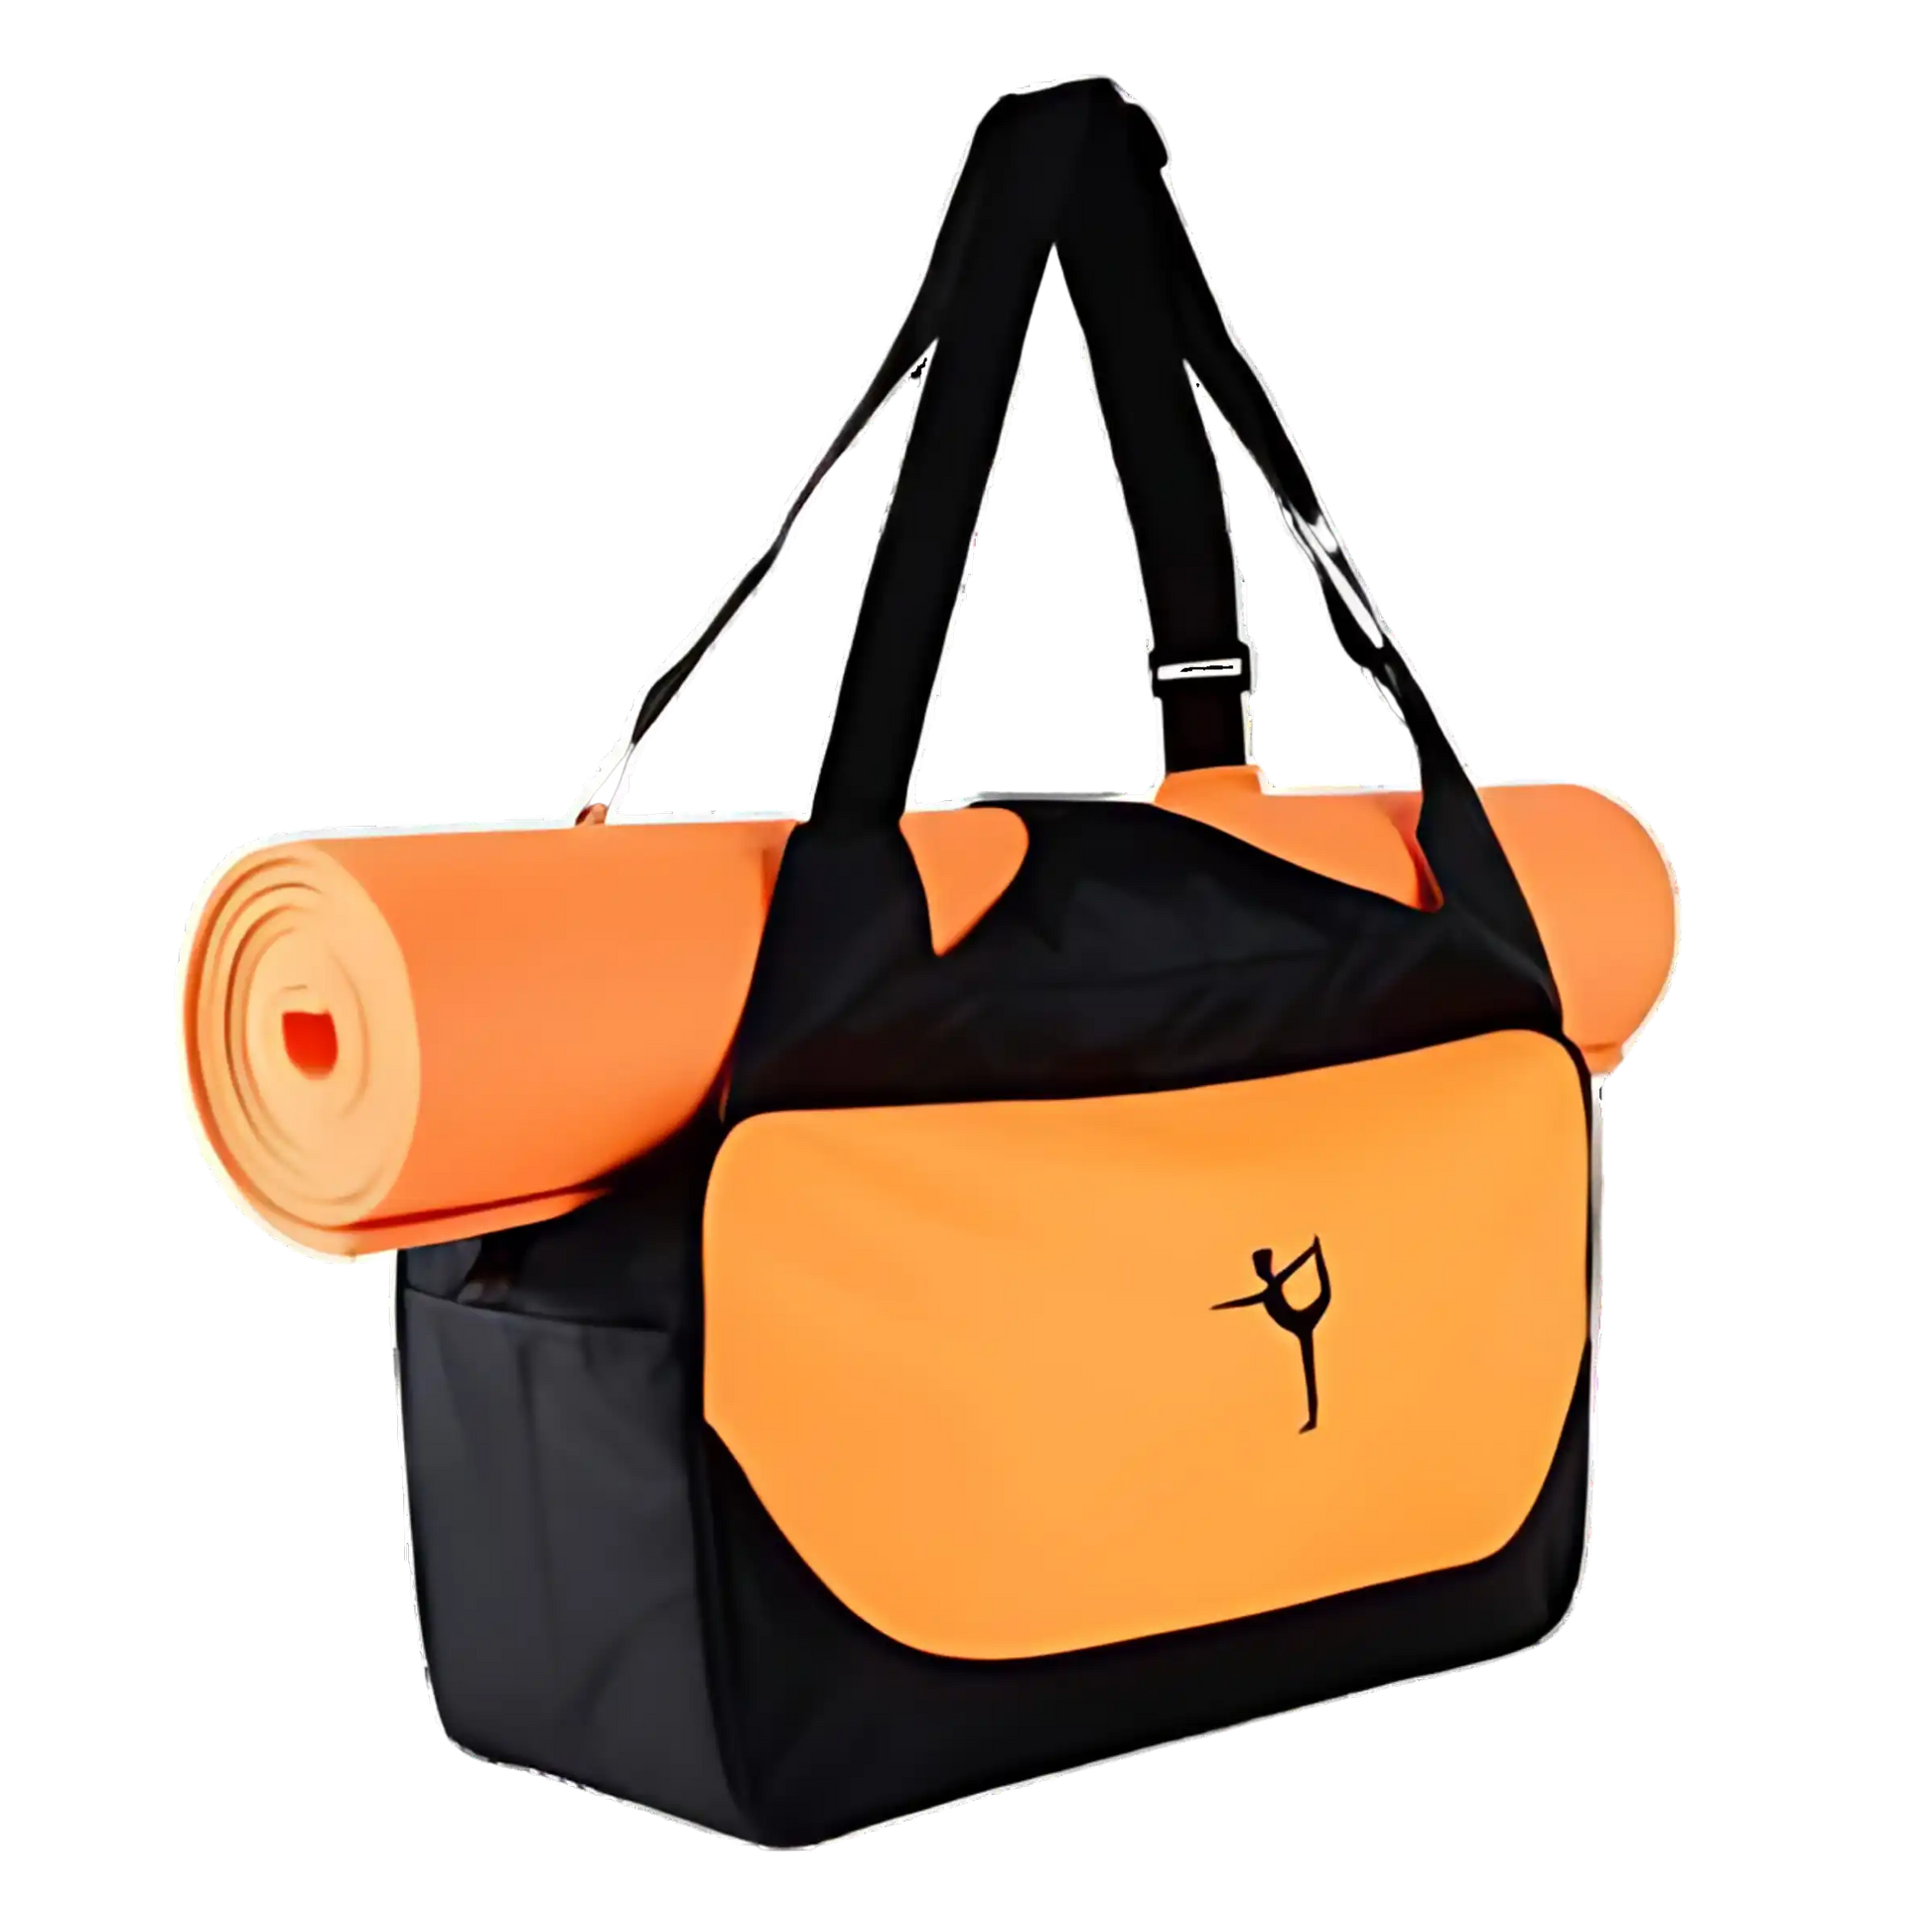 WATERPROOF YOGA MAT CARRIER BACKPACK - Orange - Yoga Bag